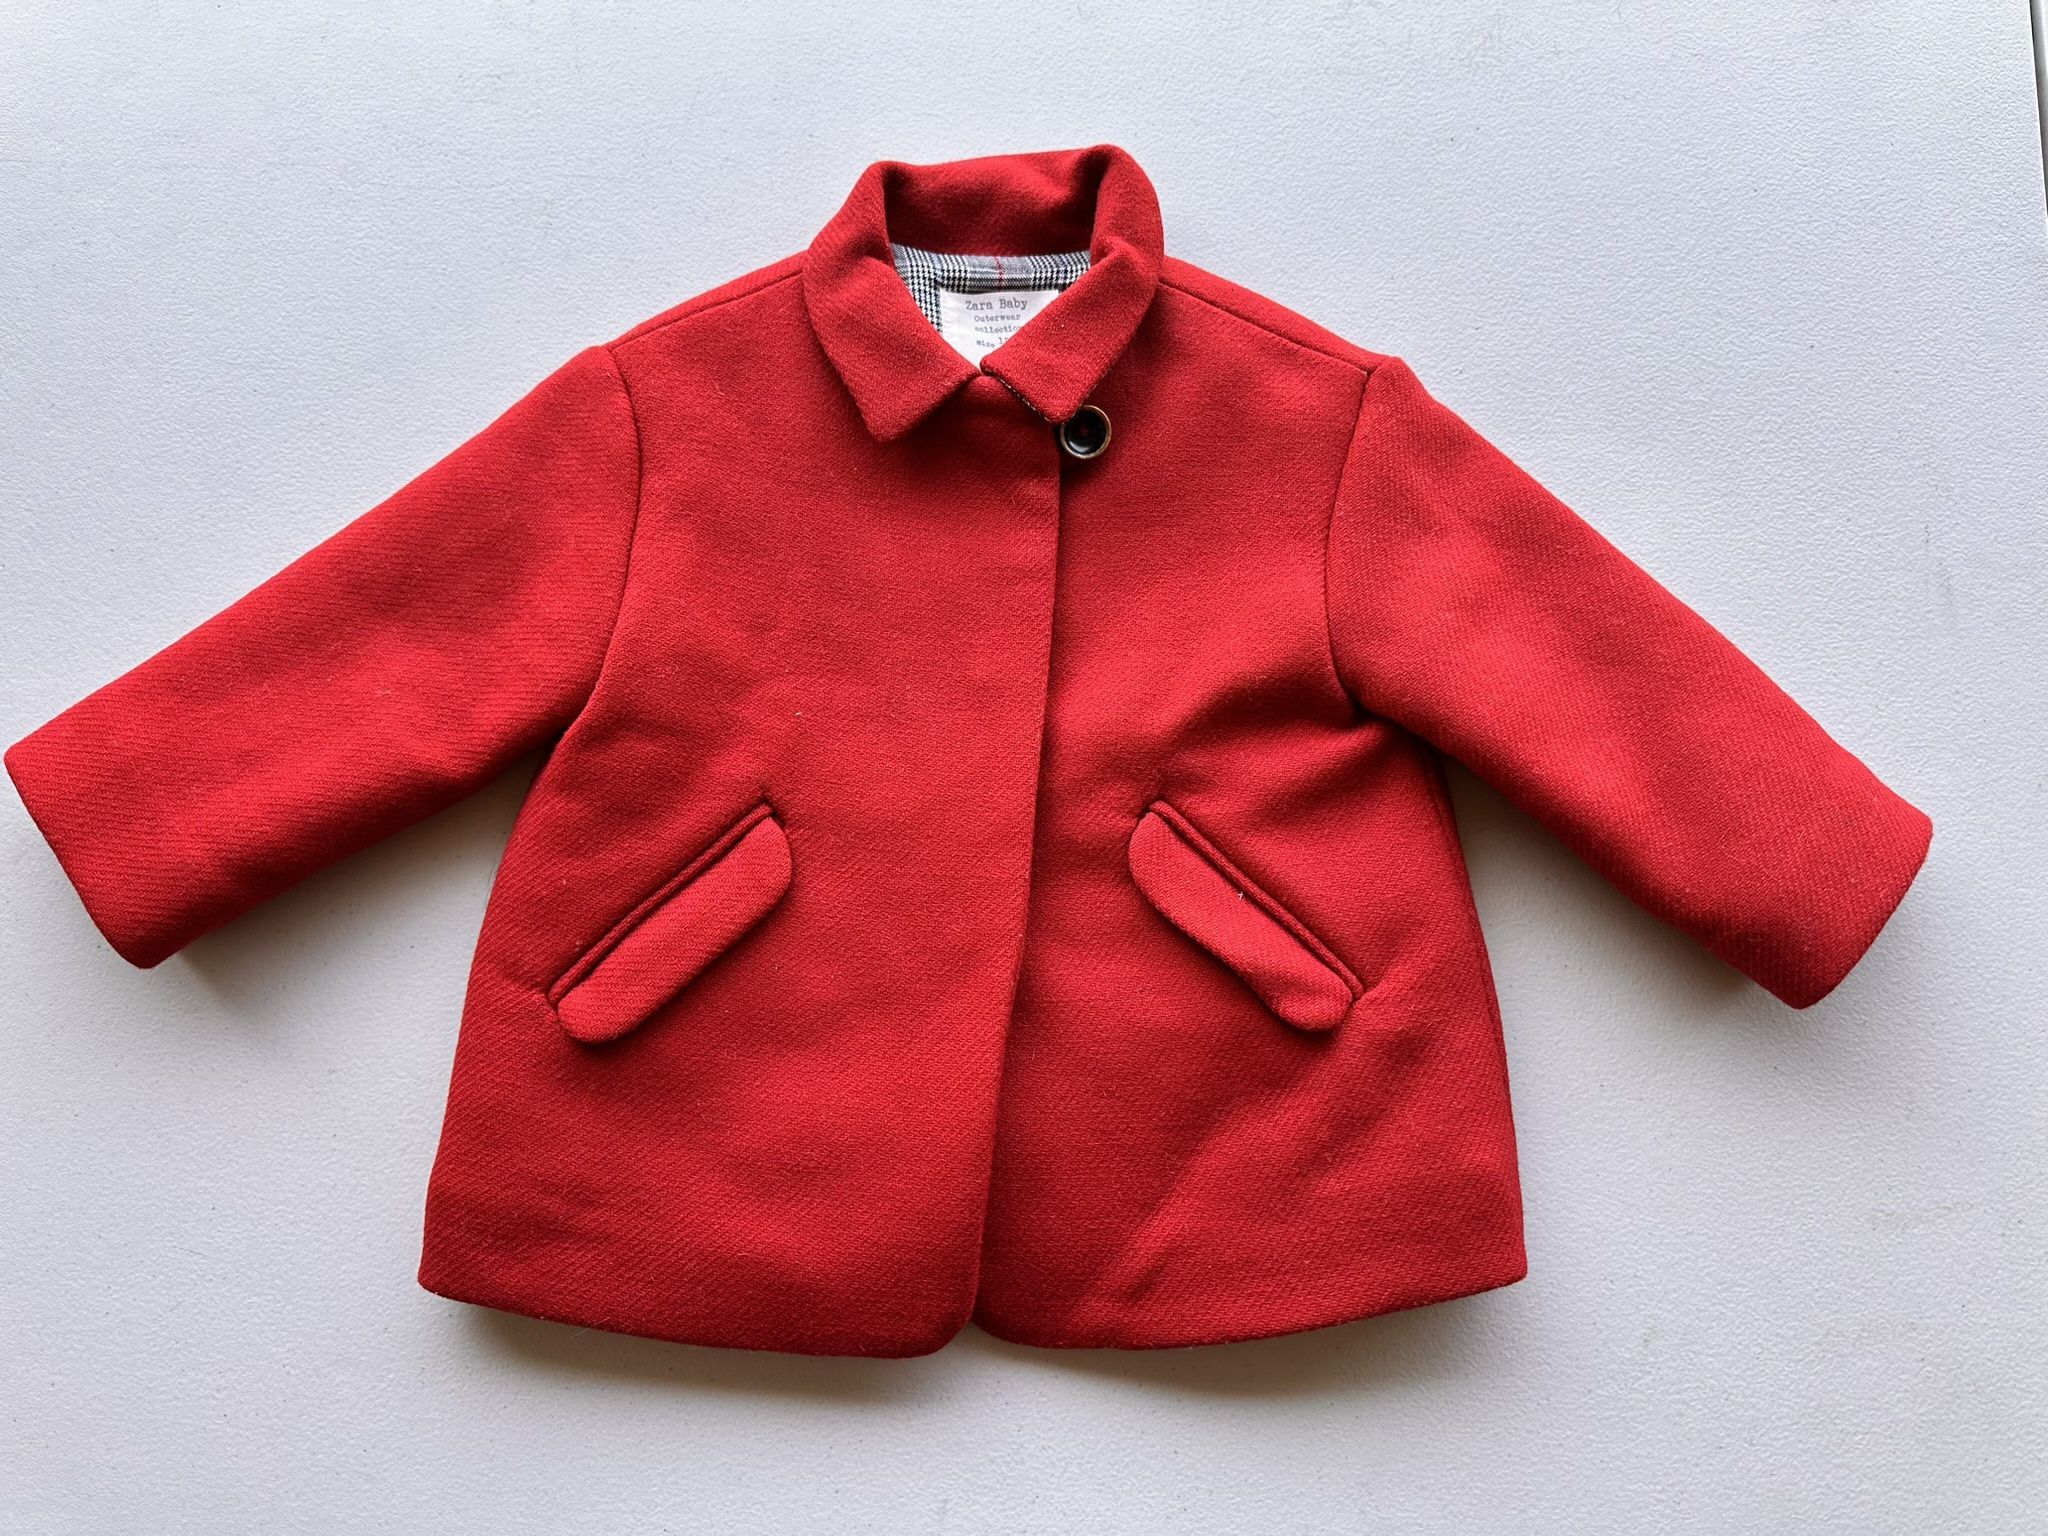  Zara Baby Red Coat 12/18 Months 